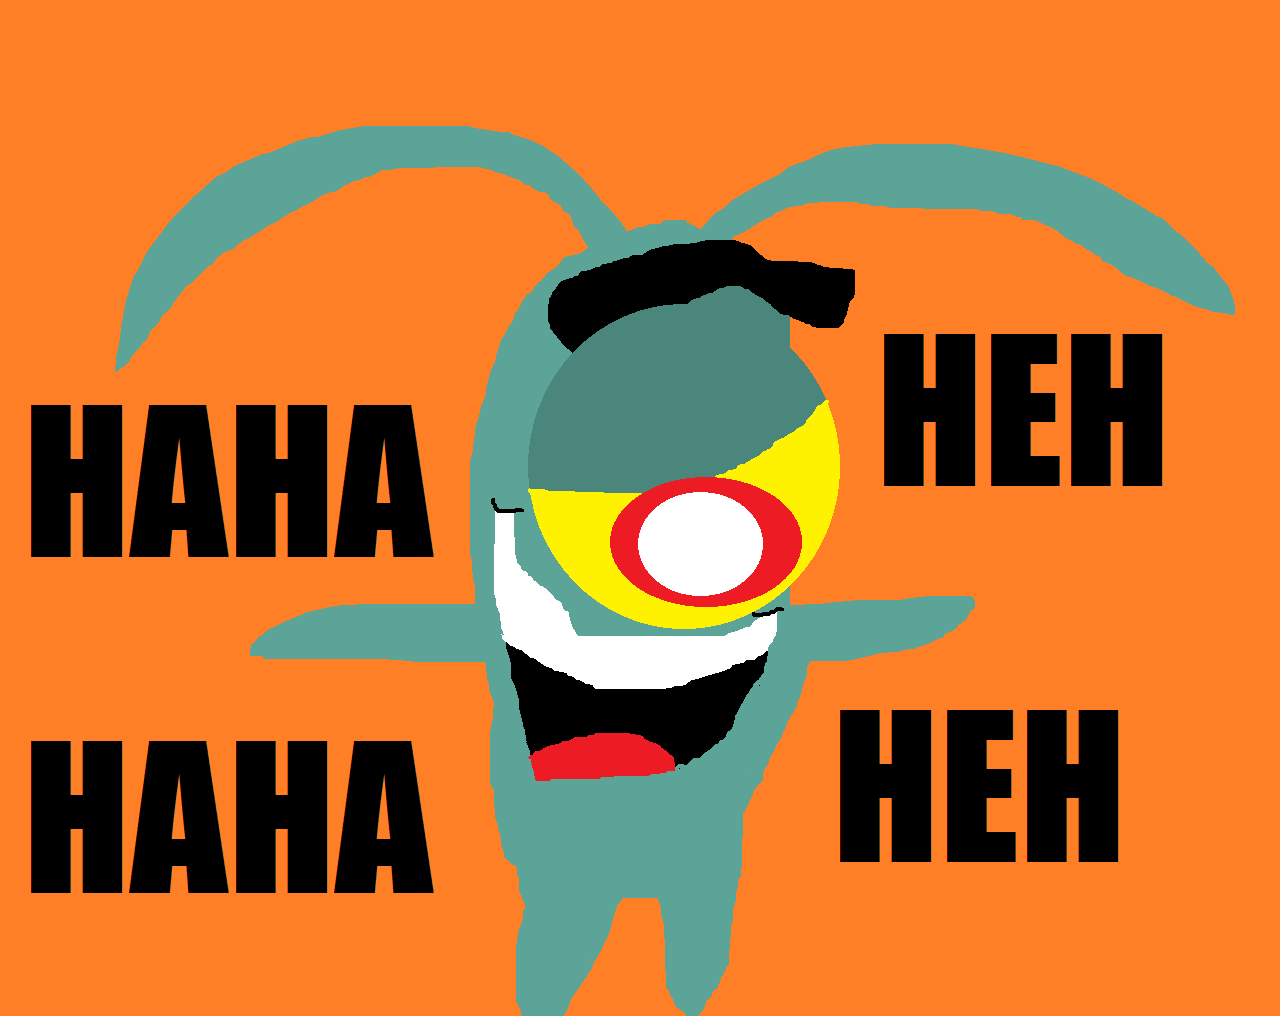 Plankton Laughing by Falconlobo